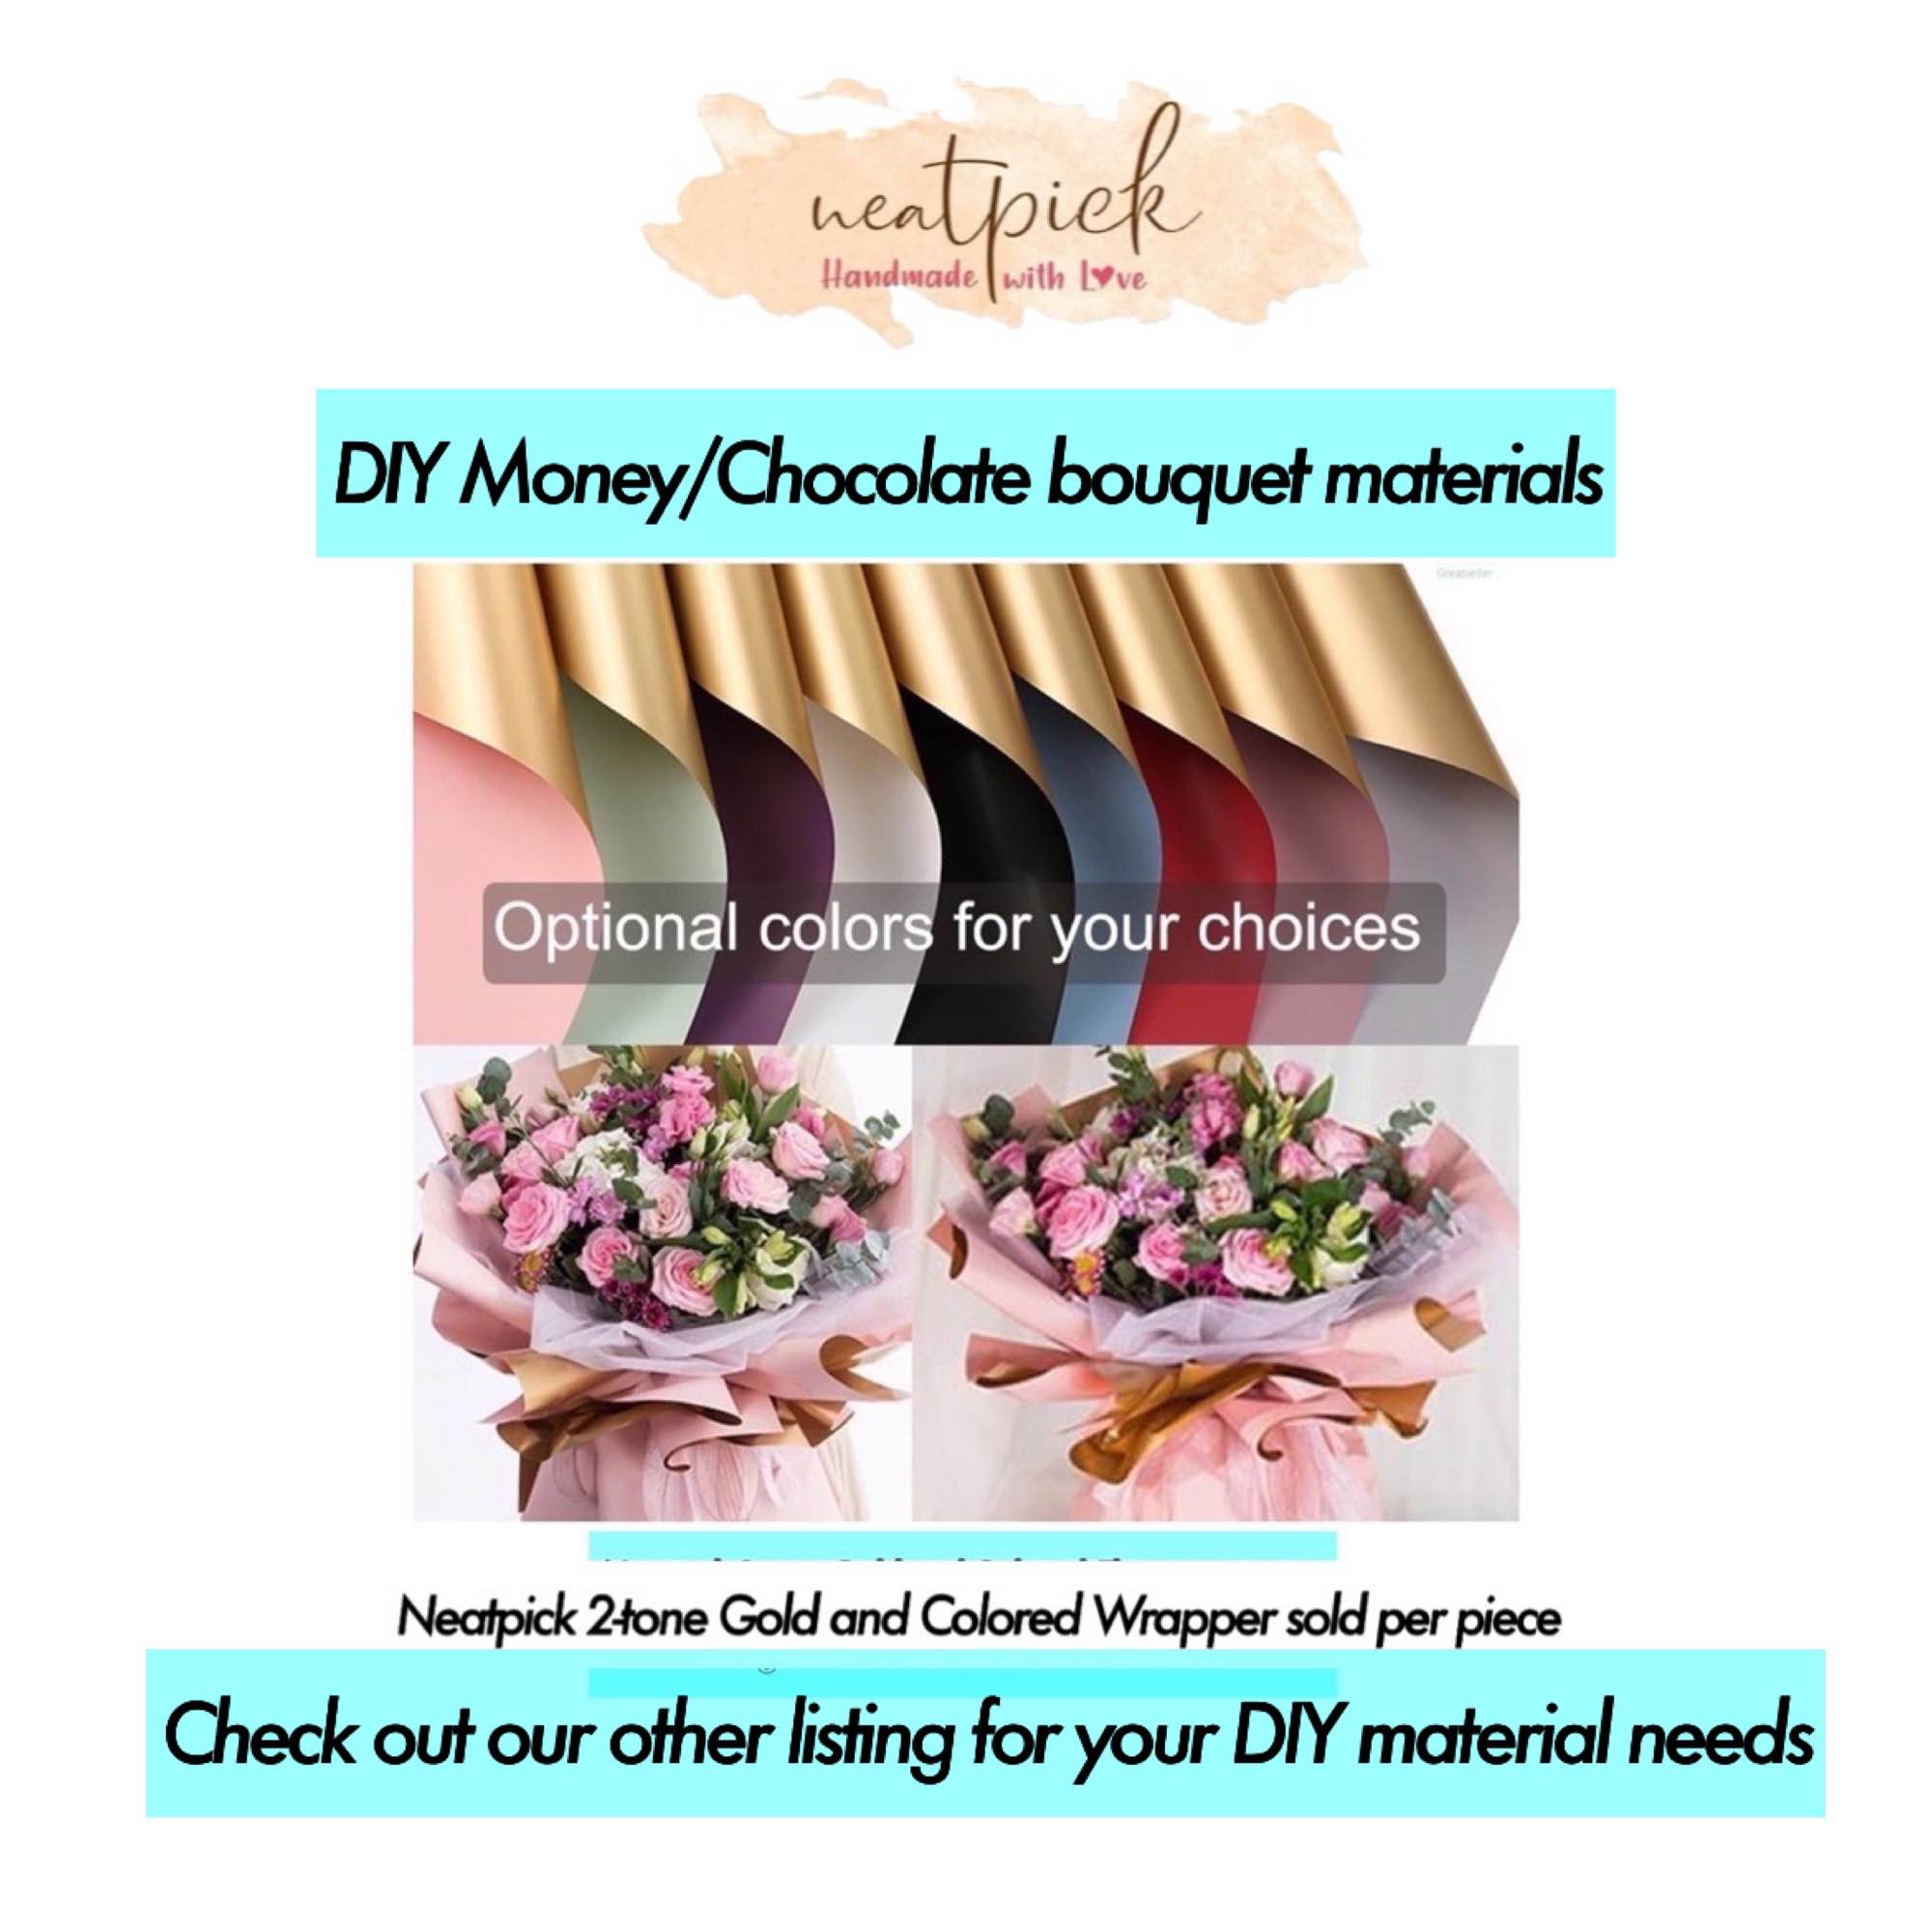 Neatpick DIY Money Chocolate Edible bouquet materials